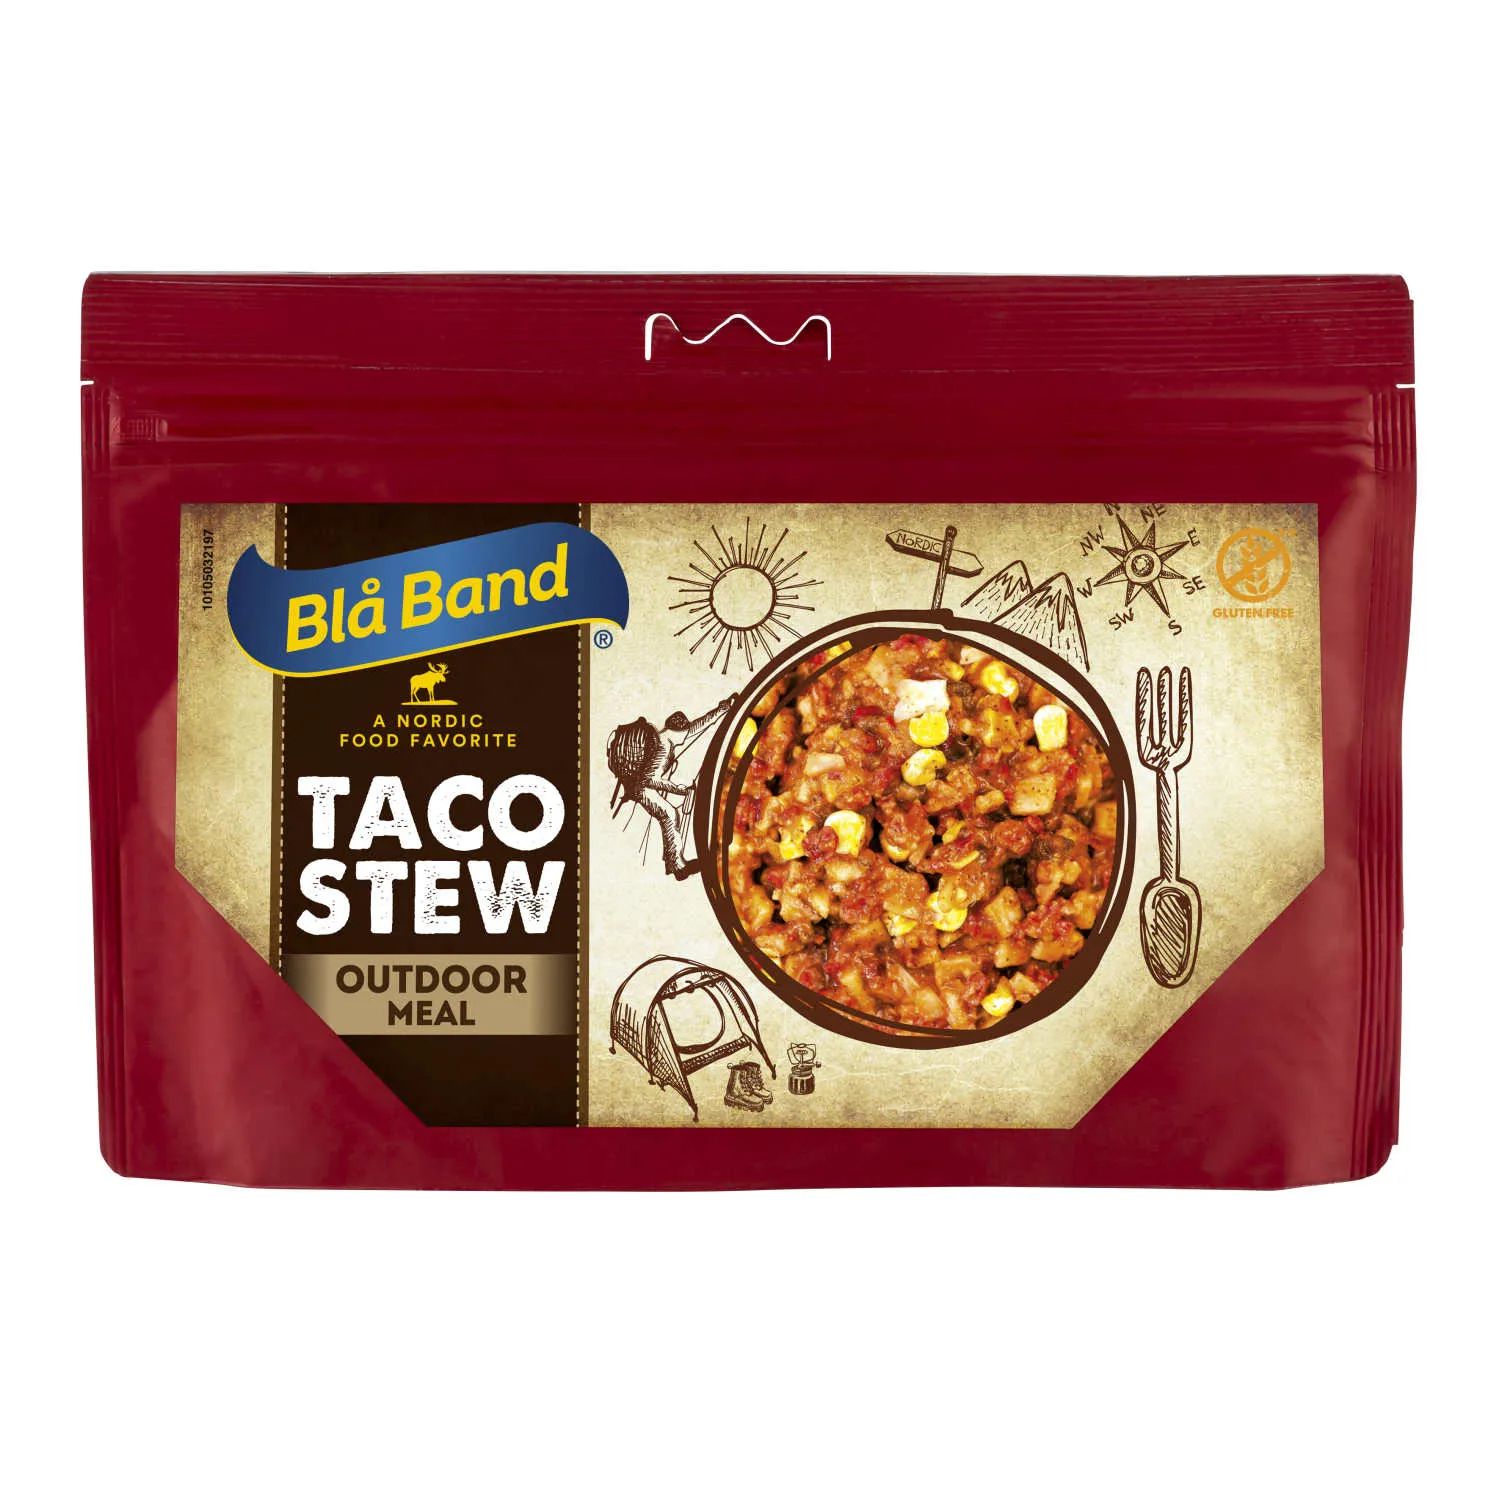 01_7241 Taco Stew.jpg